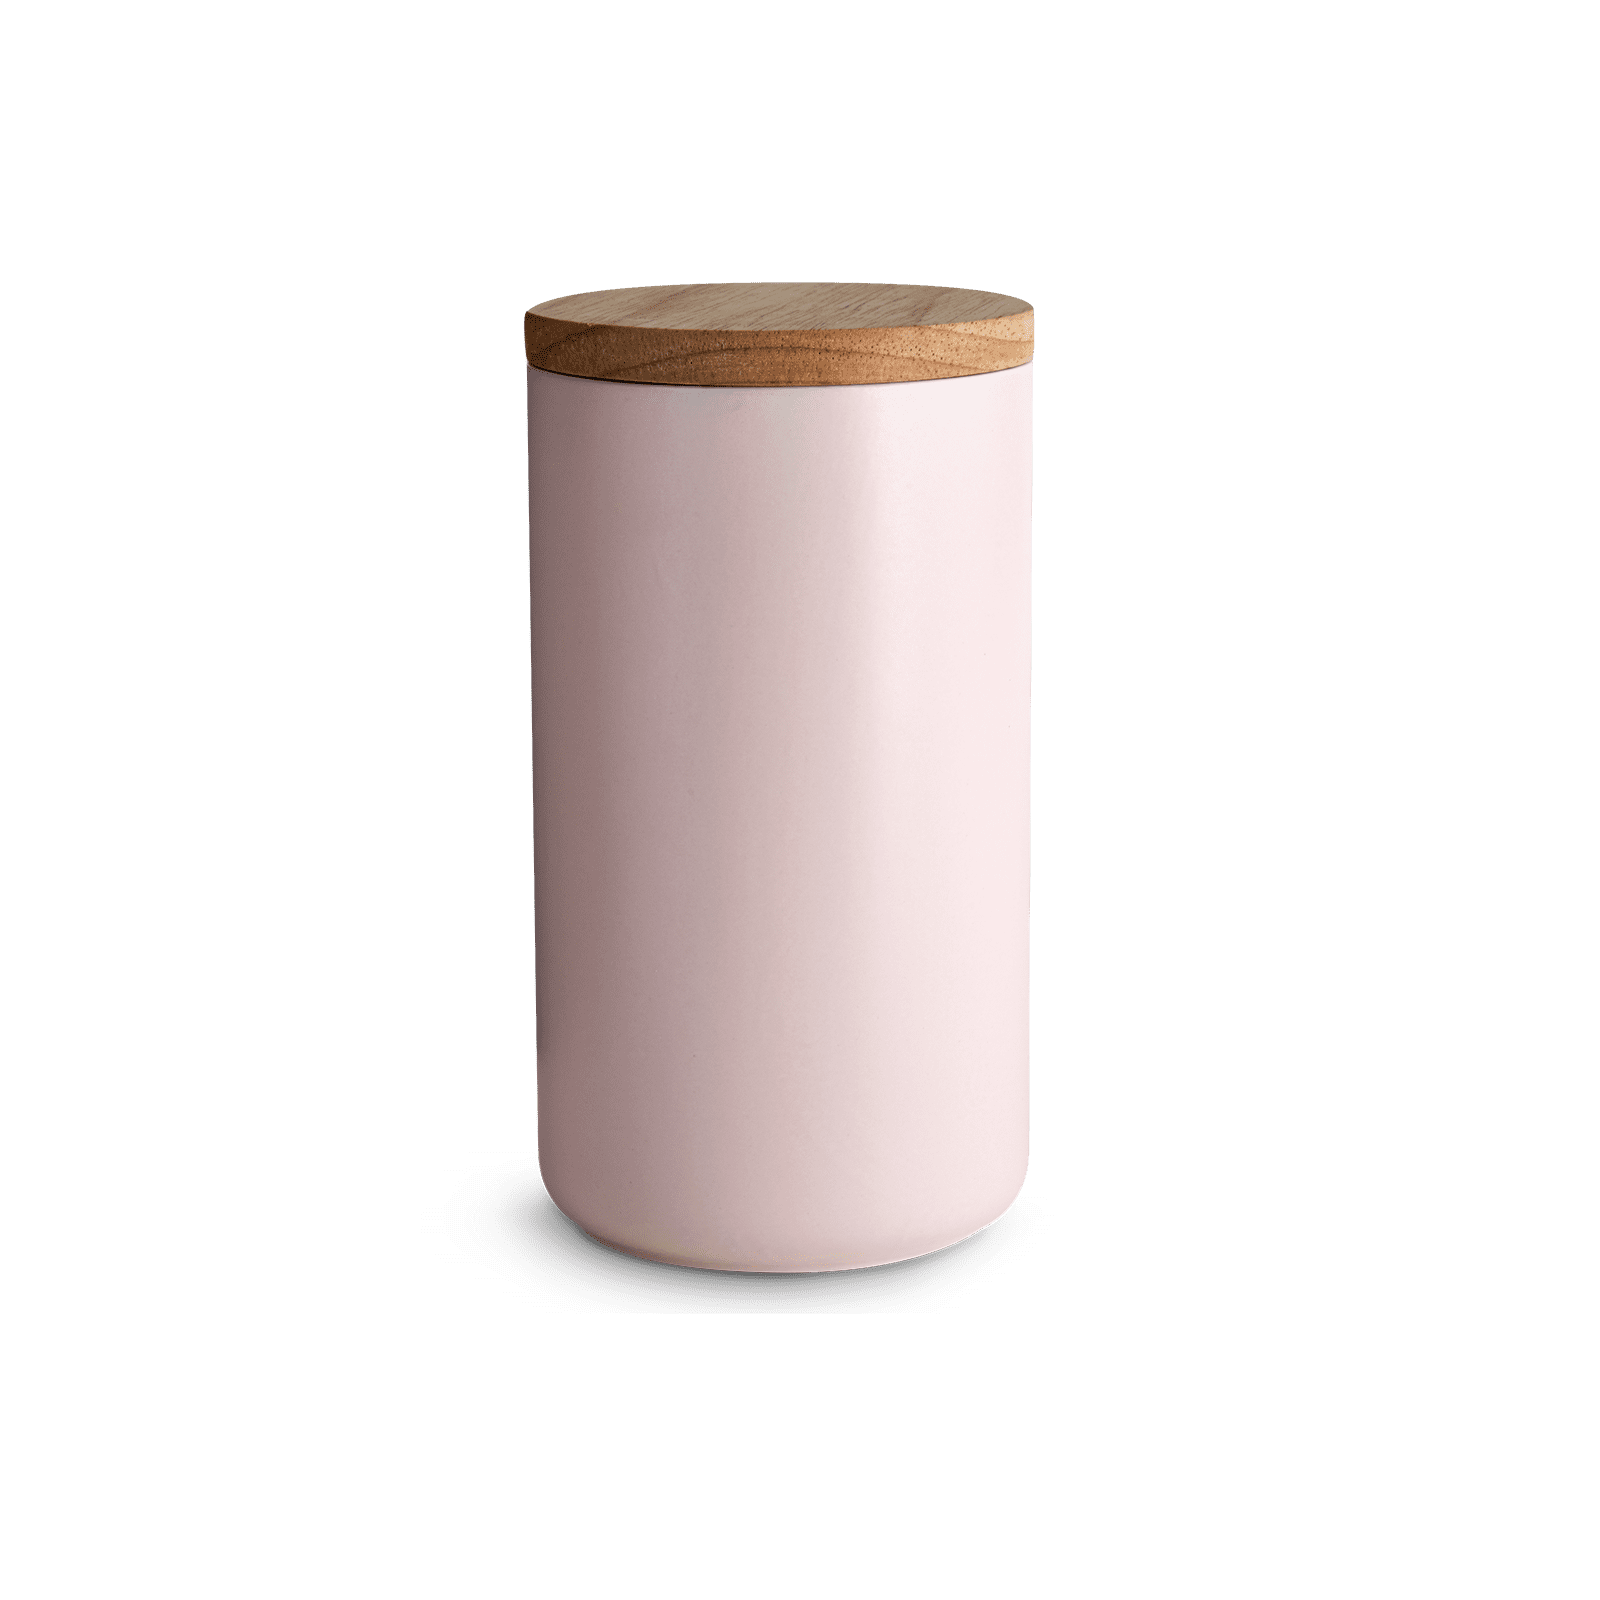 Keramik Vorratsdosen Sweet Scandi mit Holzdeckel - 10,1 x 18,3 cm - Rosa/Braun